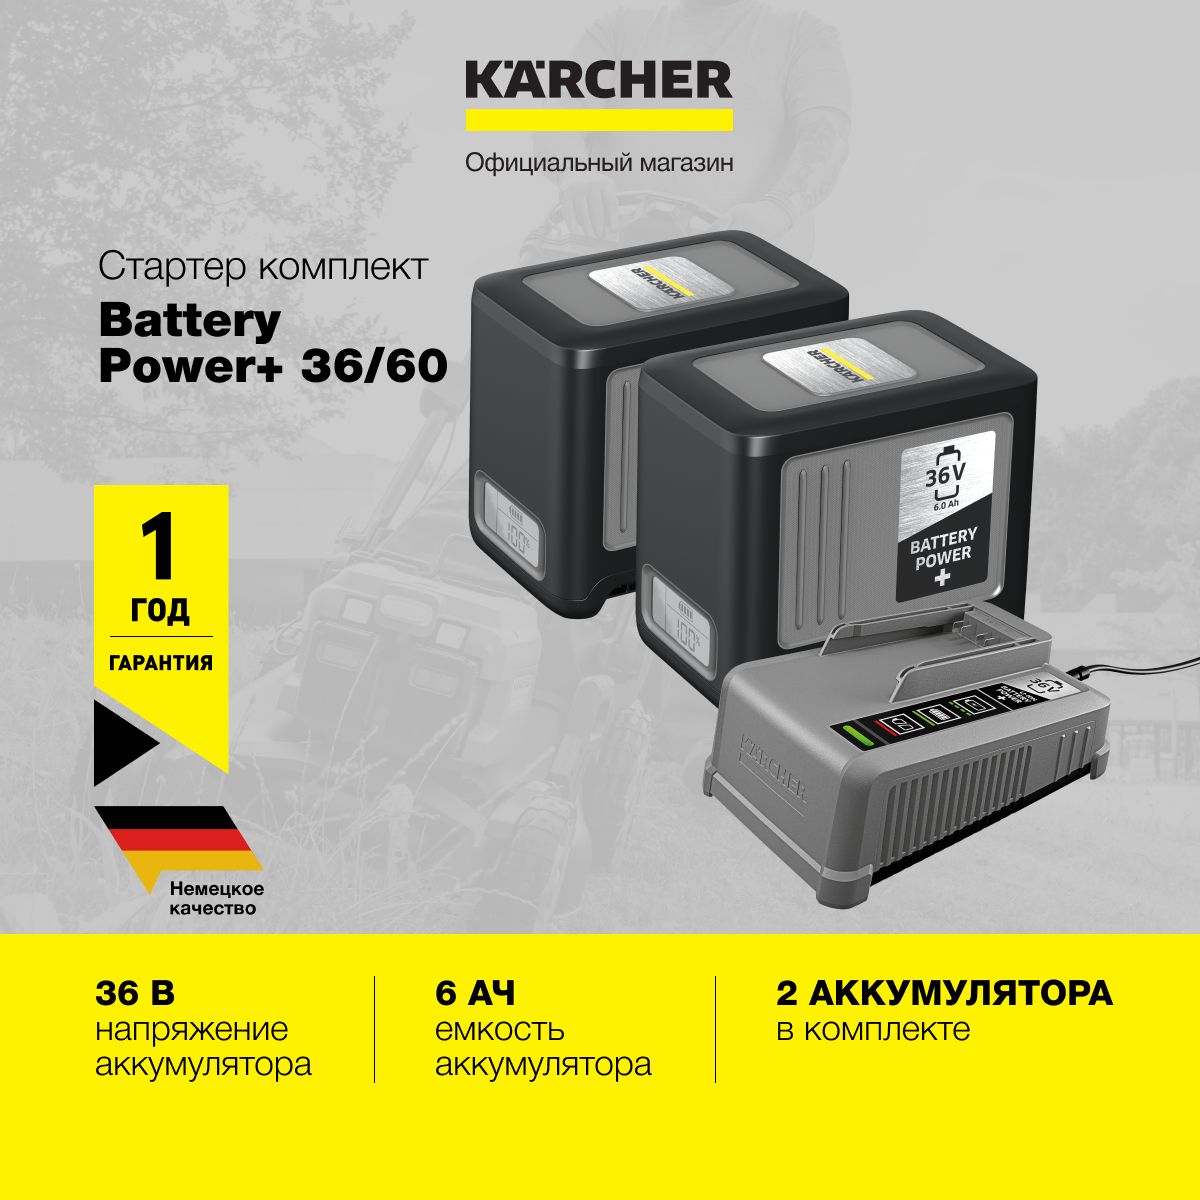 Karcher battery power. Power Battery набор батареек. Керхер на АКБ. Karcher Battery Battery Power 36/50 аккумулятор. Kärcher Battery Battery Power 36/25 аккумулятор.